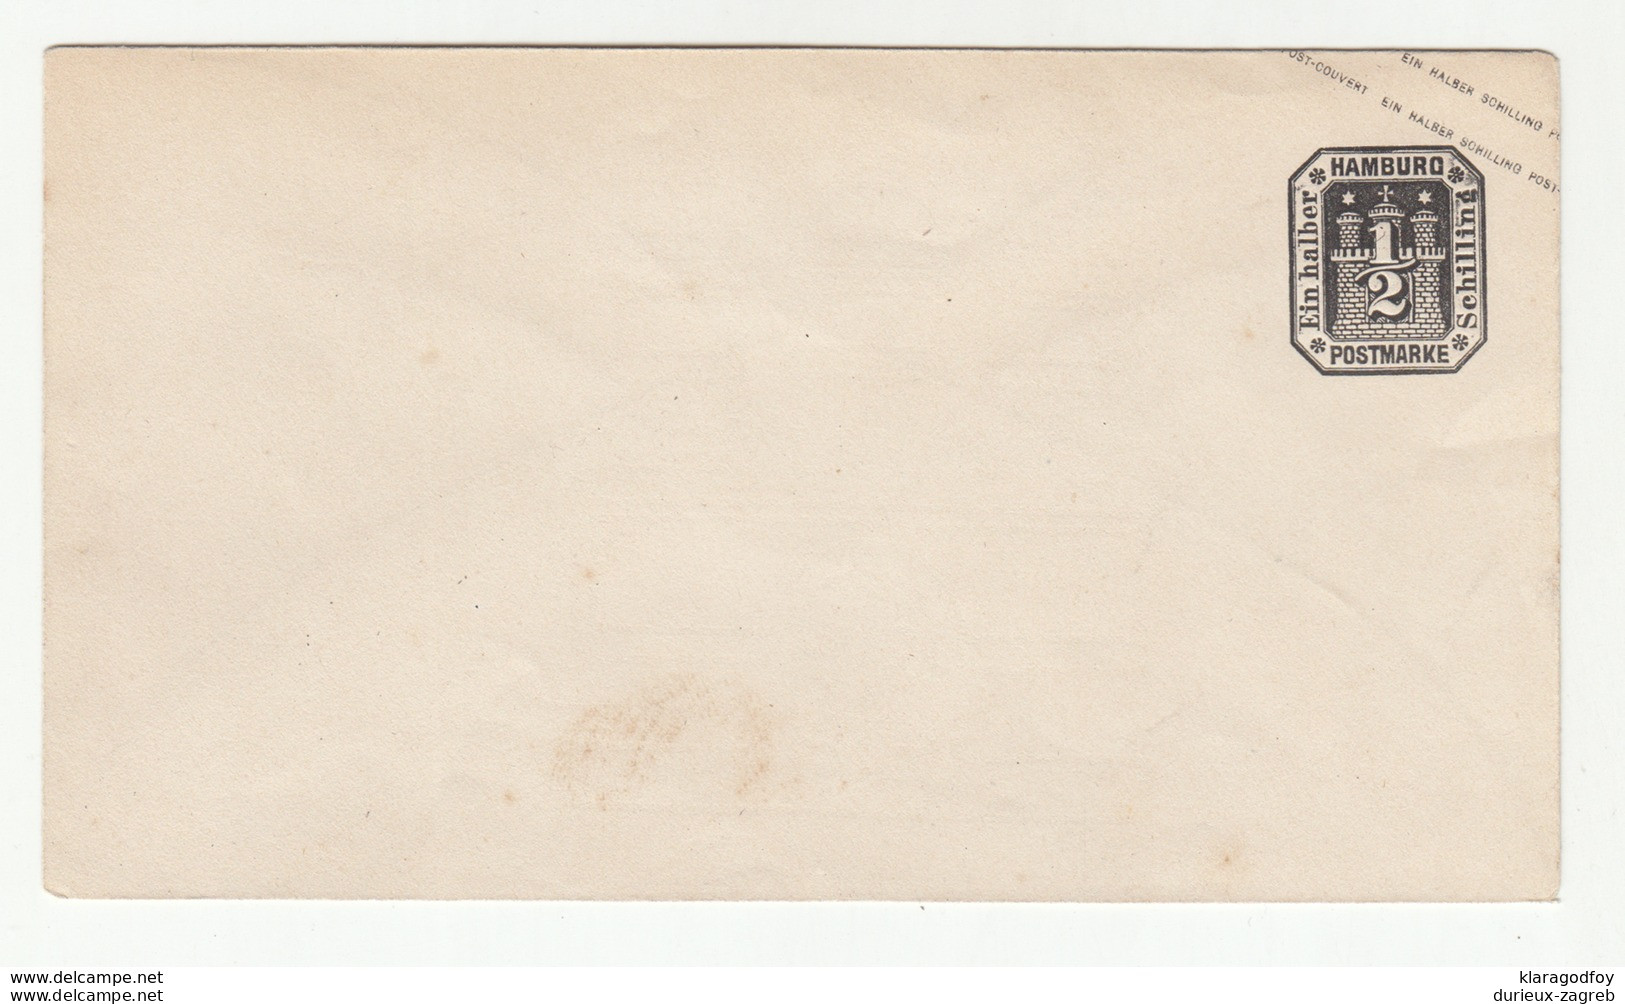 Hamburg 1/2 Schilling Postal Stationery Letter Cover Unused B202015 - Hamburg